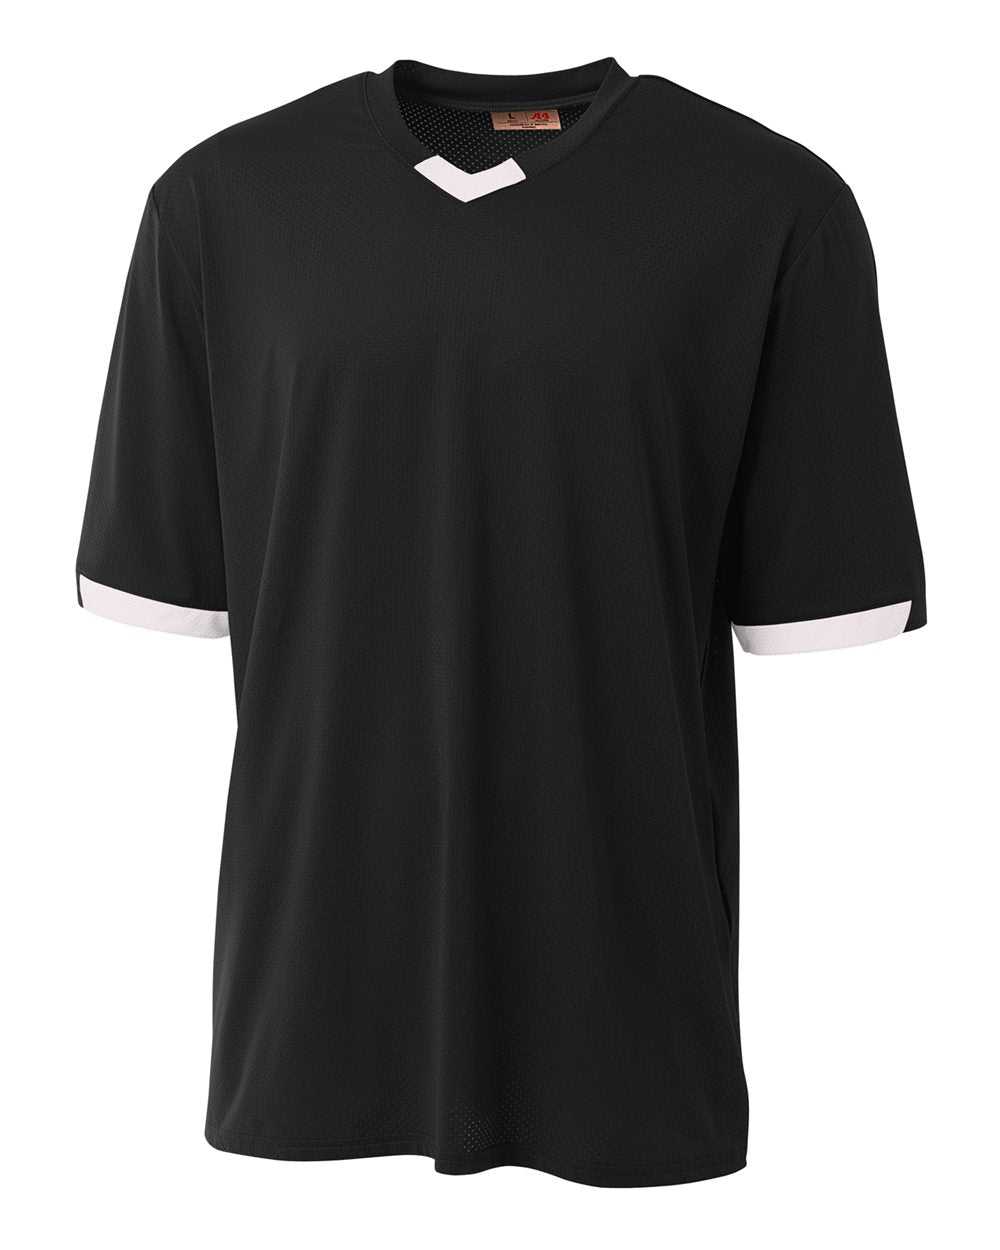 A4 N3011 The Stretch Pro - Mesh Baseball Jersey - Black White - HIT a Double